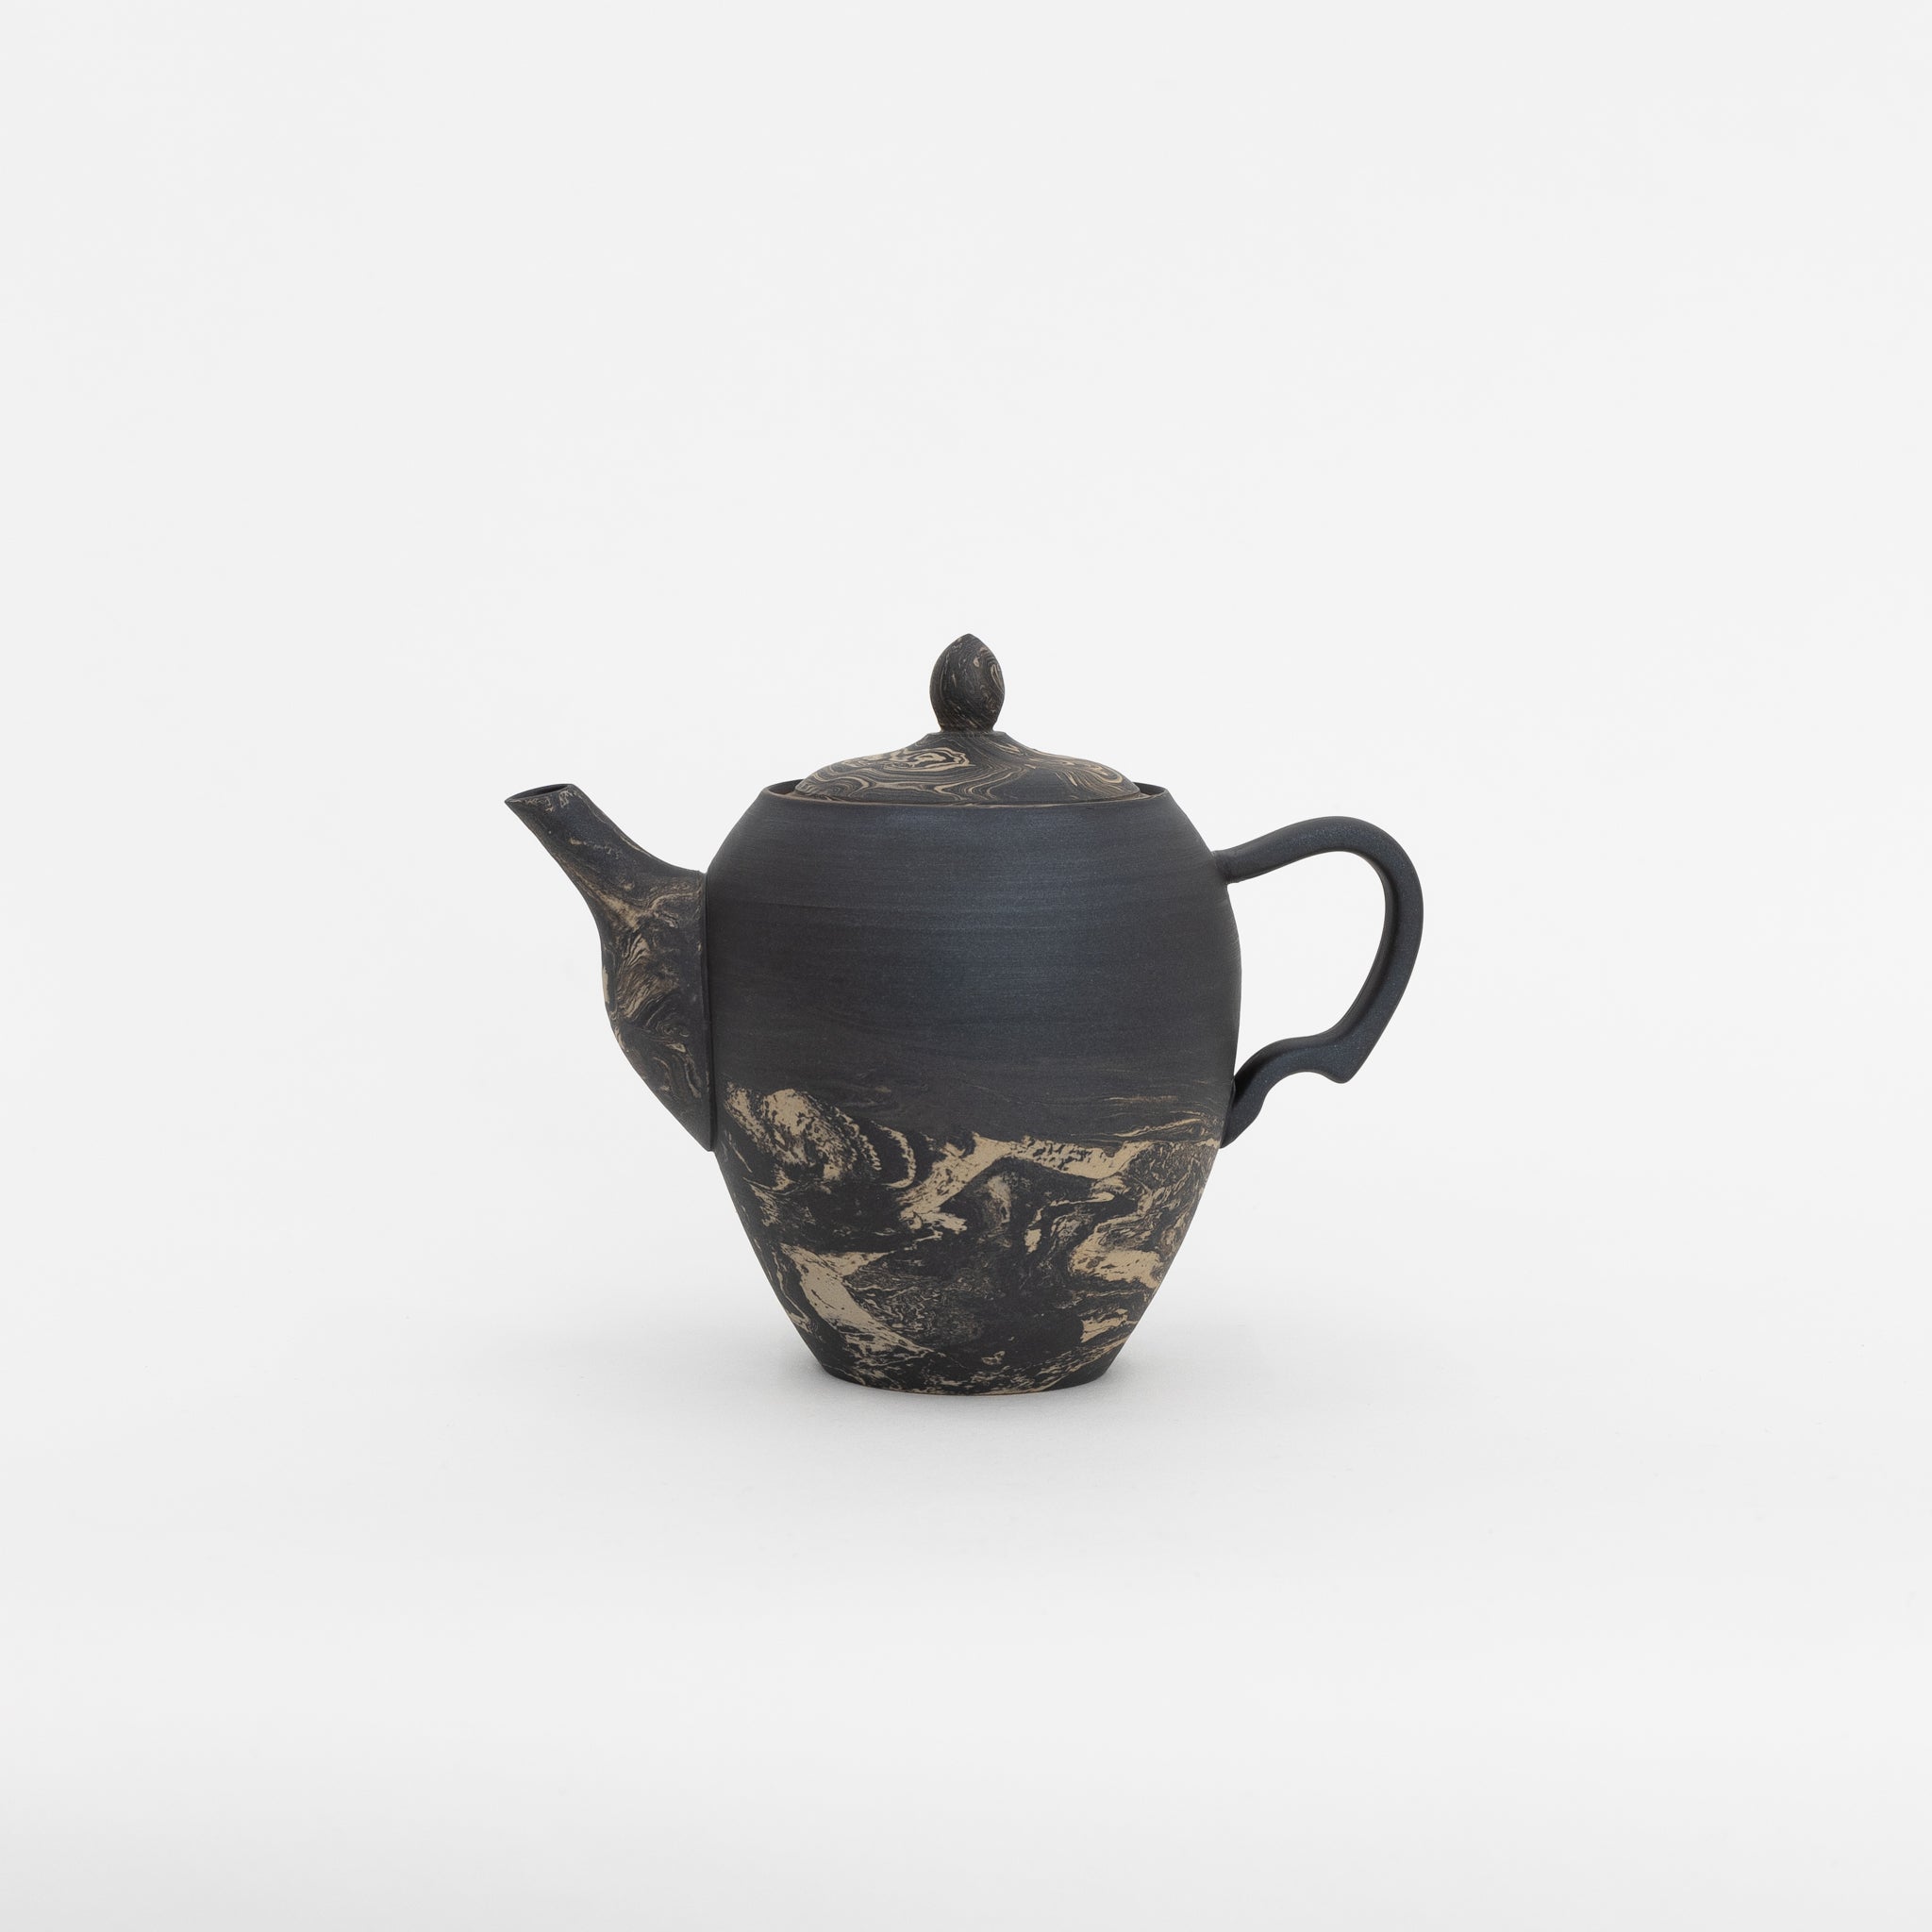 Gena Kuwan Ceramic Teapot - Black | Tortoise General Store